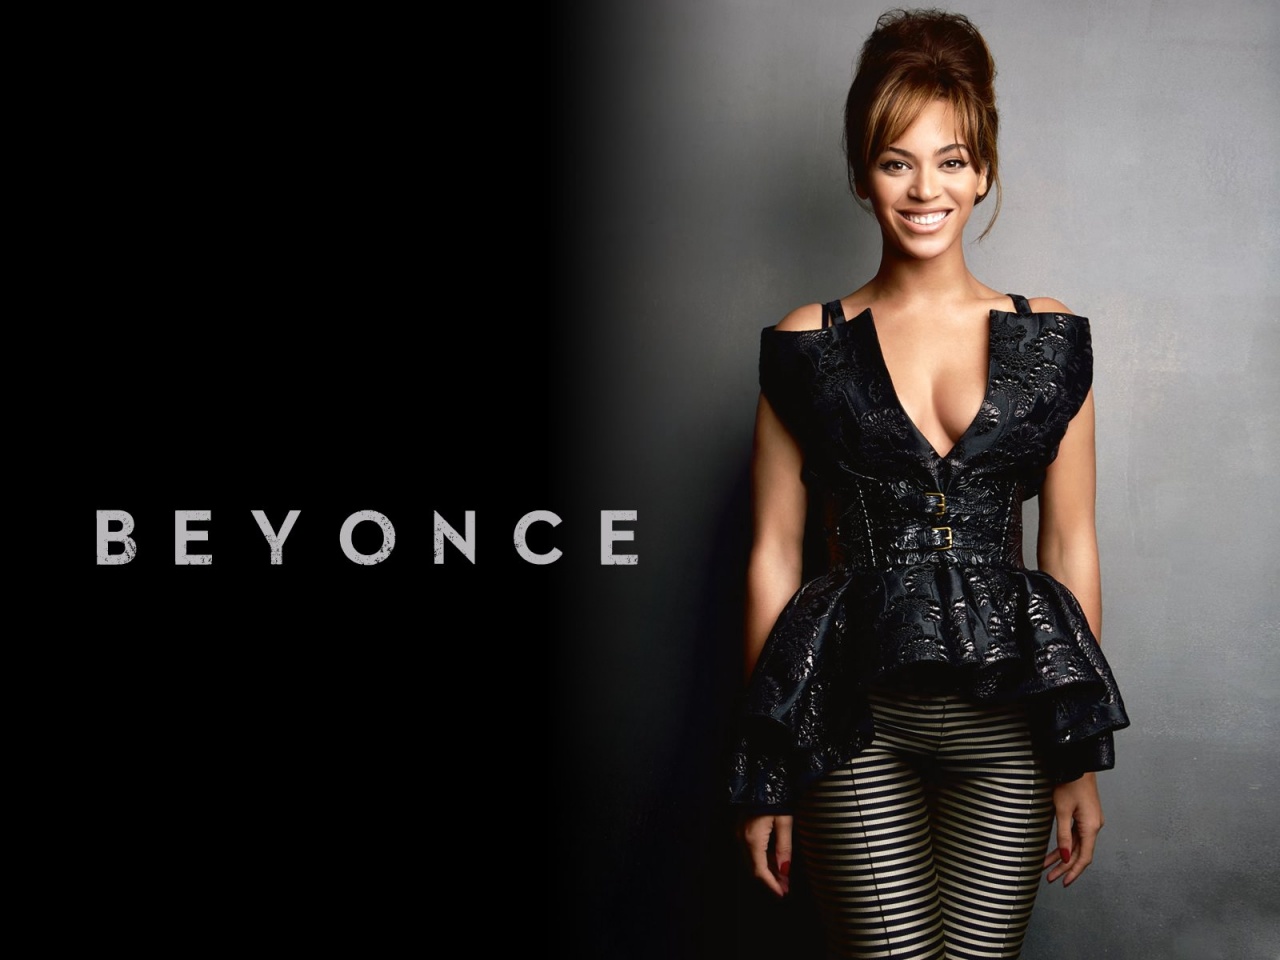 75+] Beyonce Wallpapers - WallpaperSafari